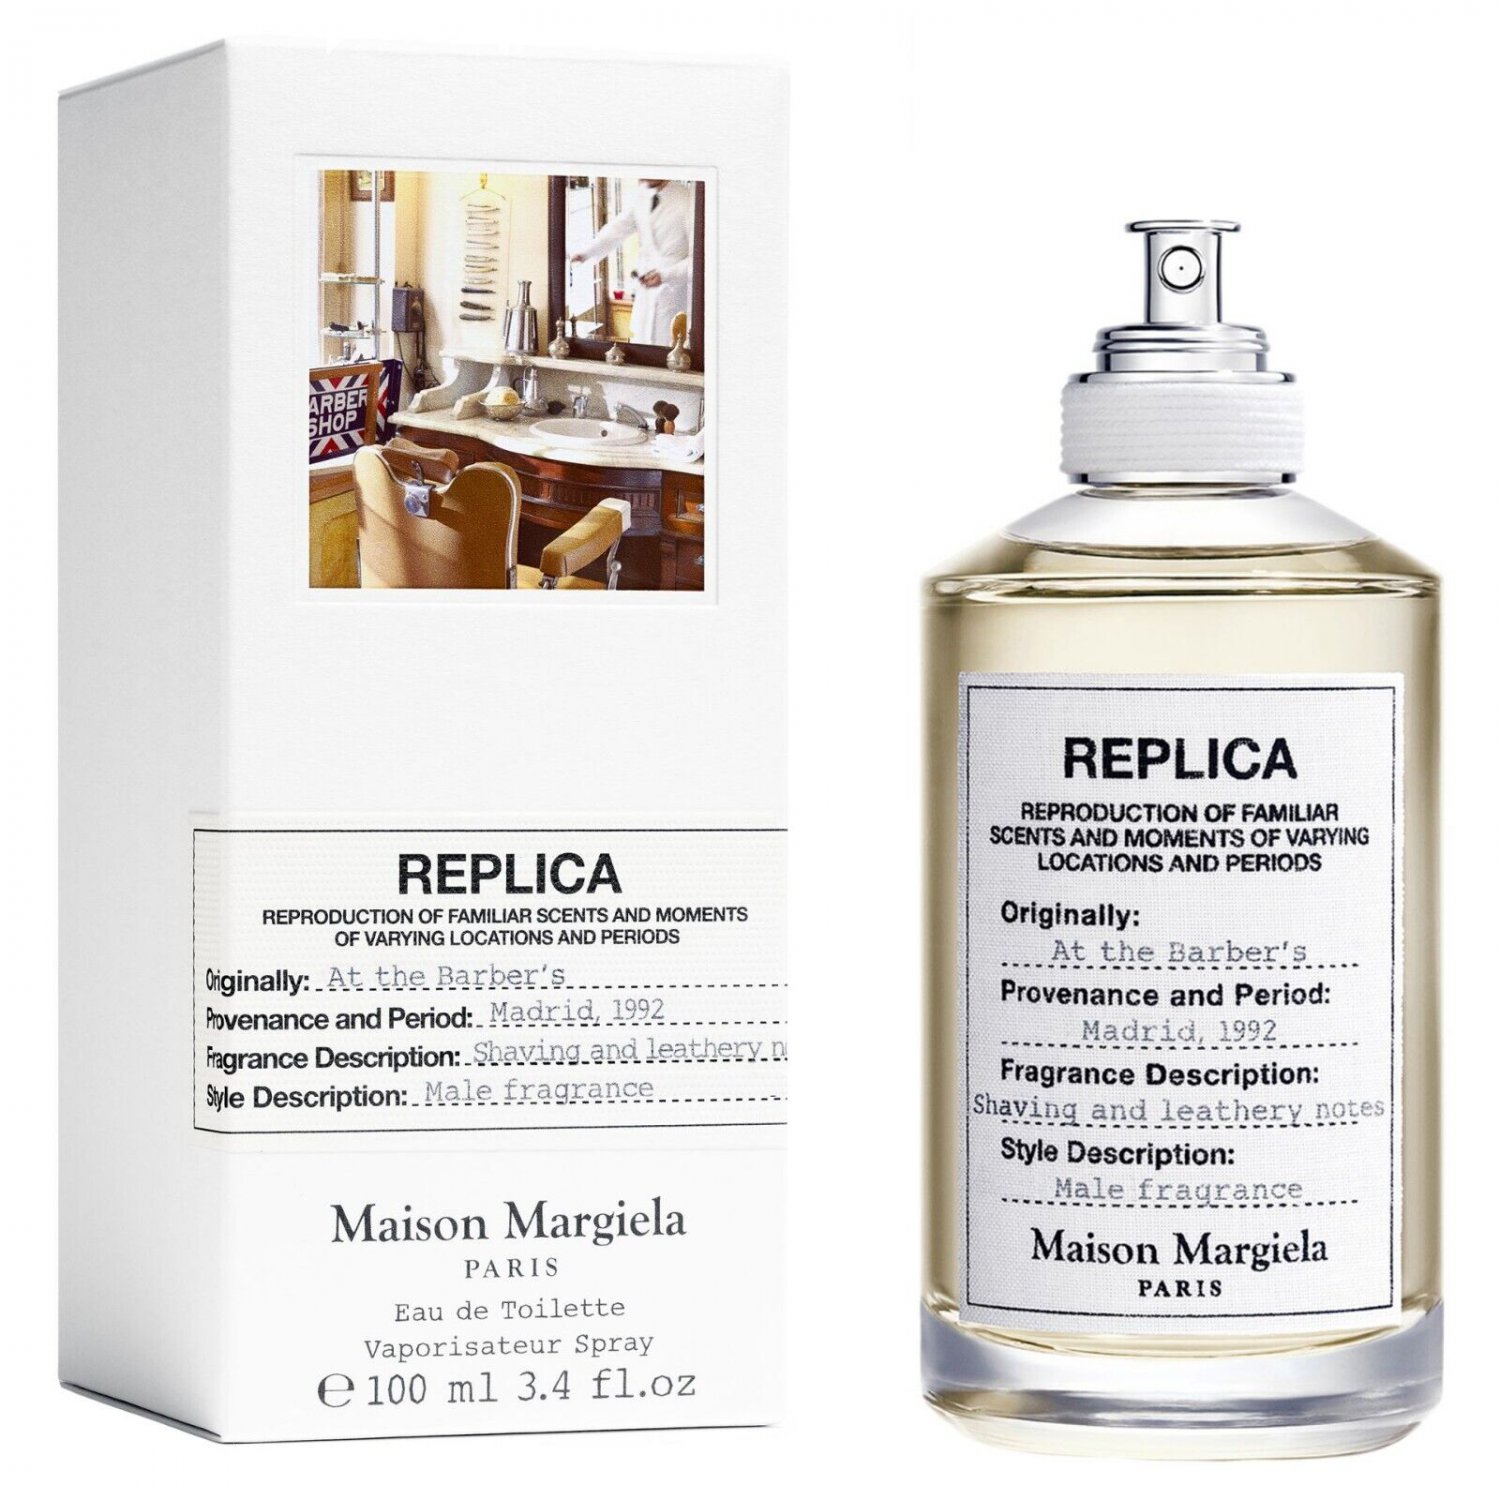 Maison Margiela Replica At the Barber's Eau de Toilette 3.4 oz Spray.